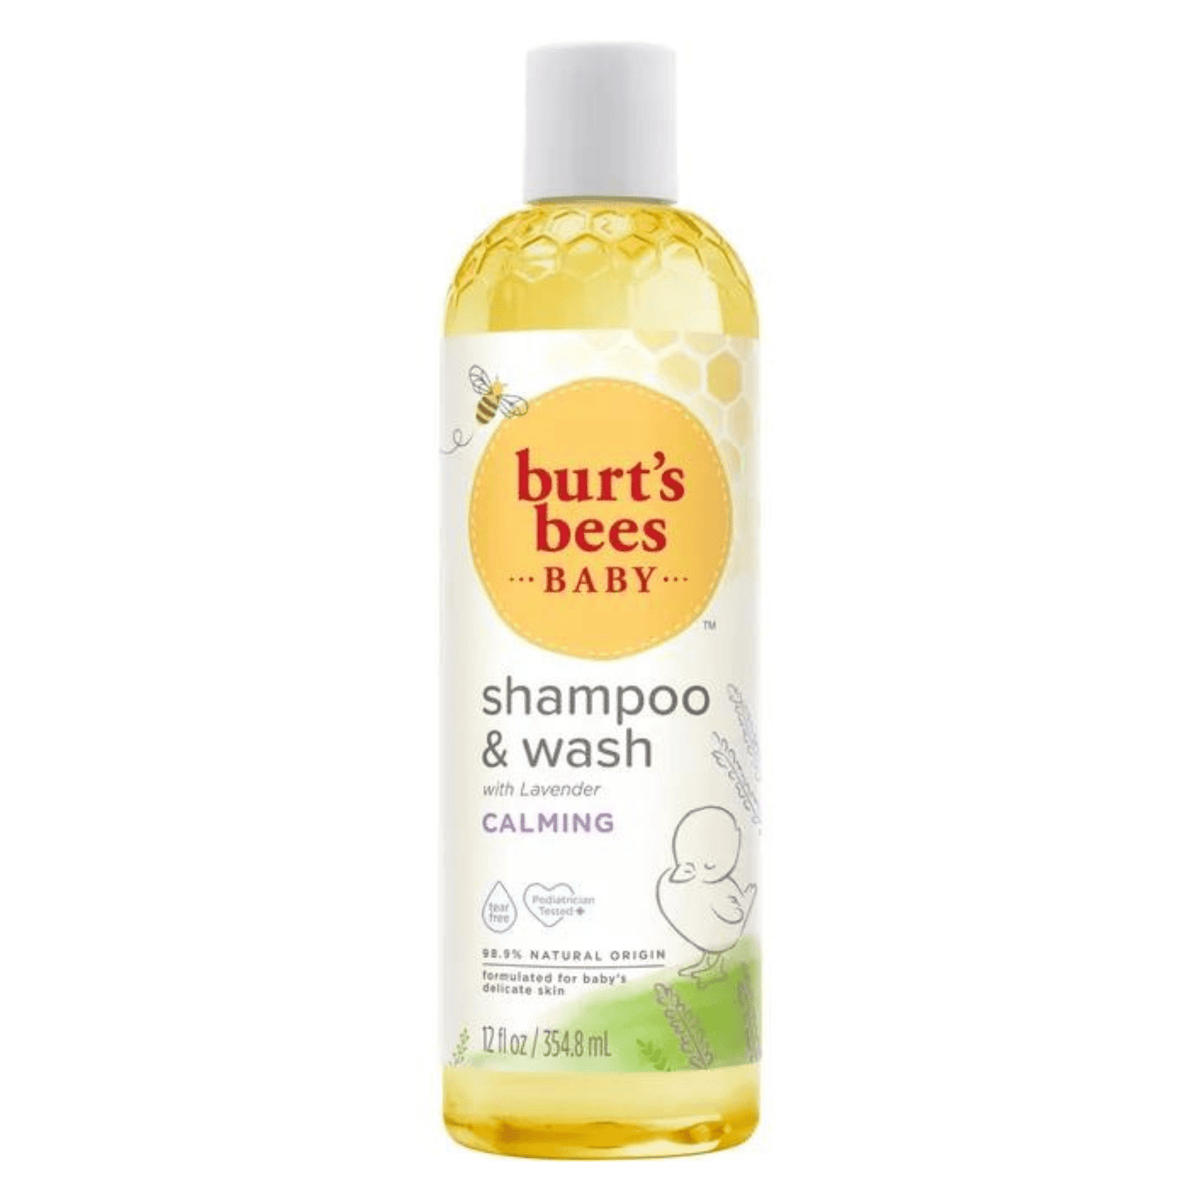 Primary Image of Baby Bee Calming Shampoo + Wash